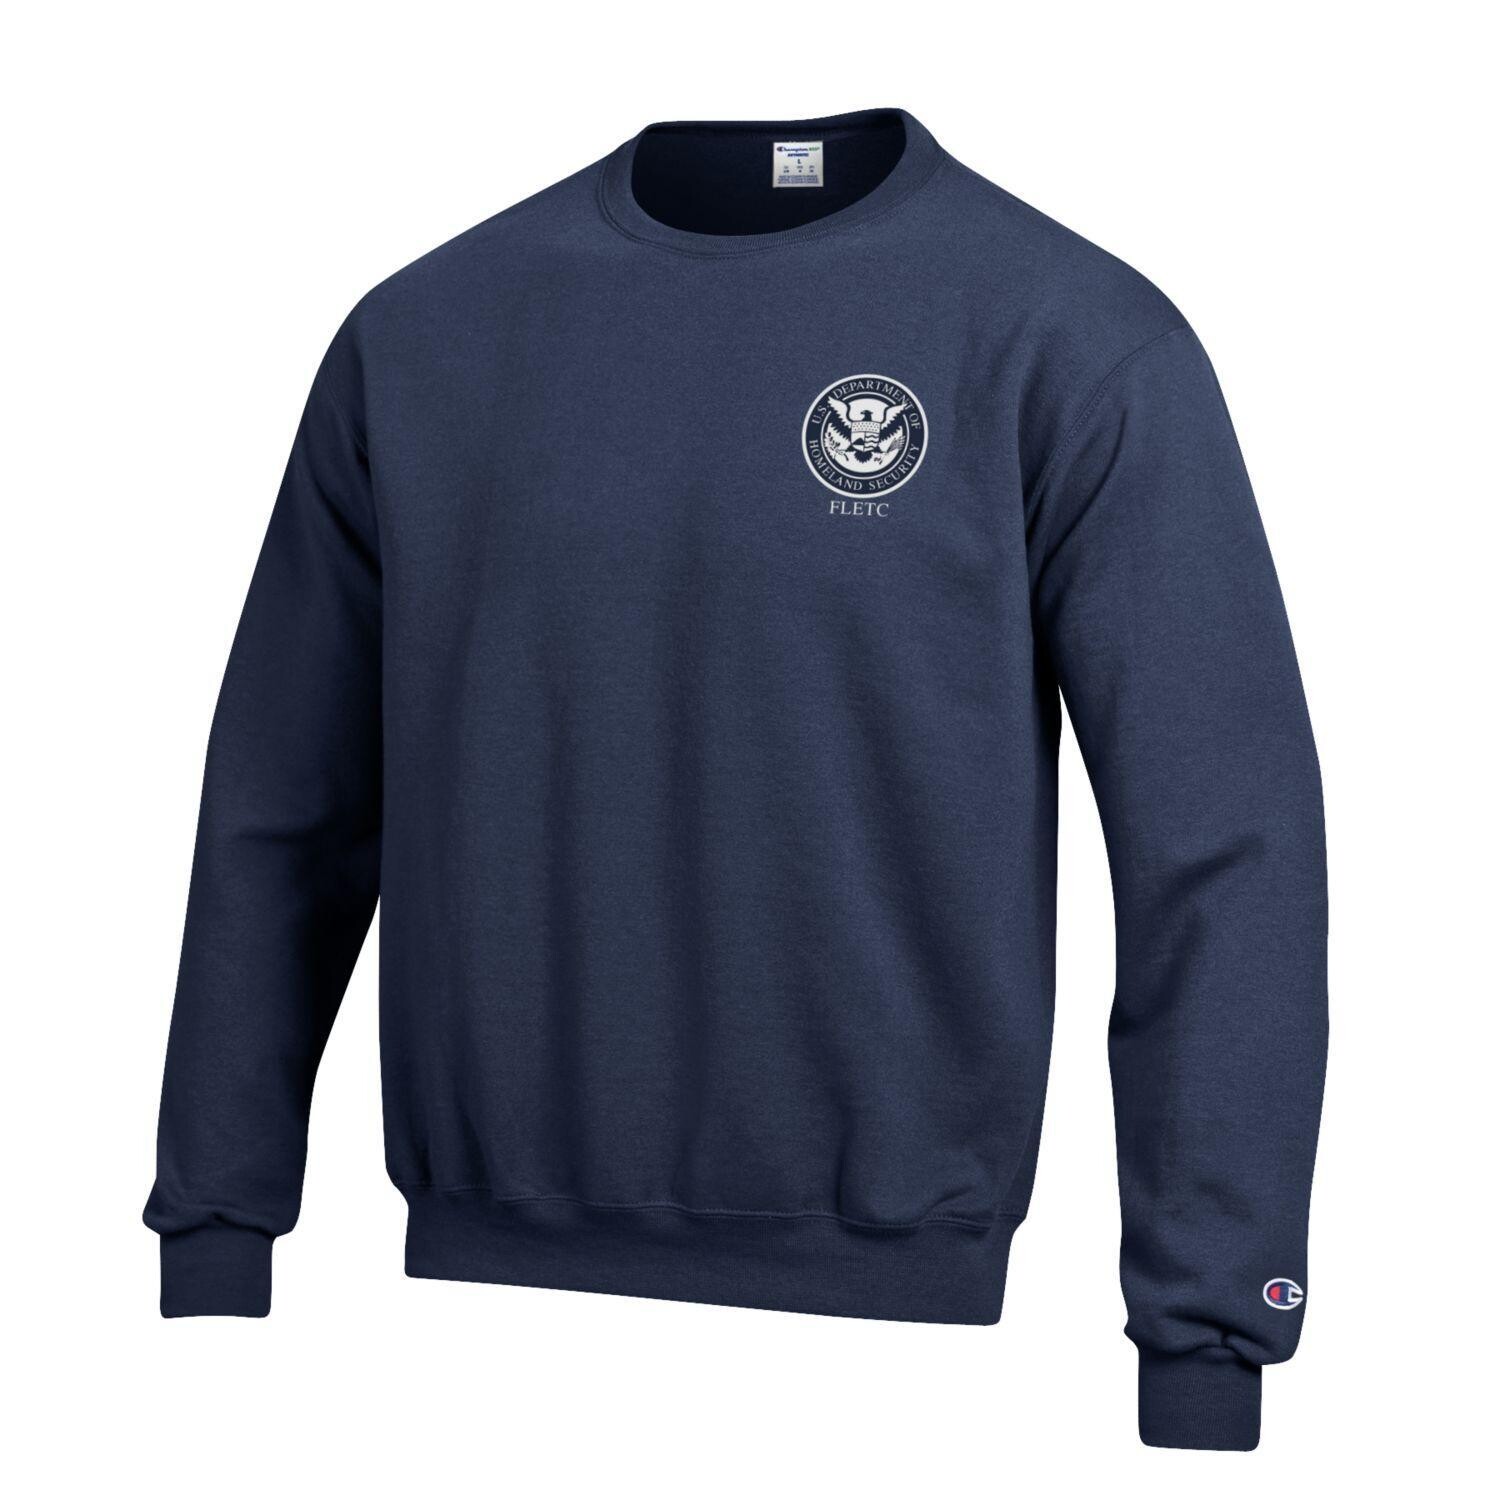 DHS/FLETC Crew Neck Sweatshirt